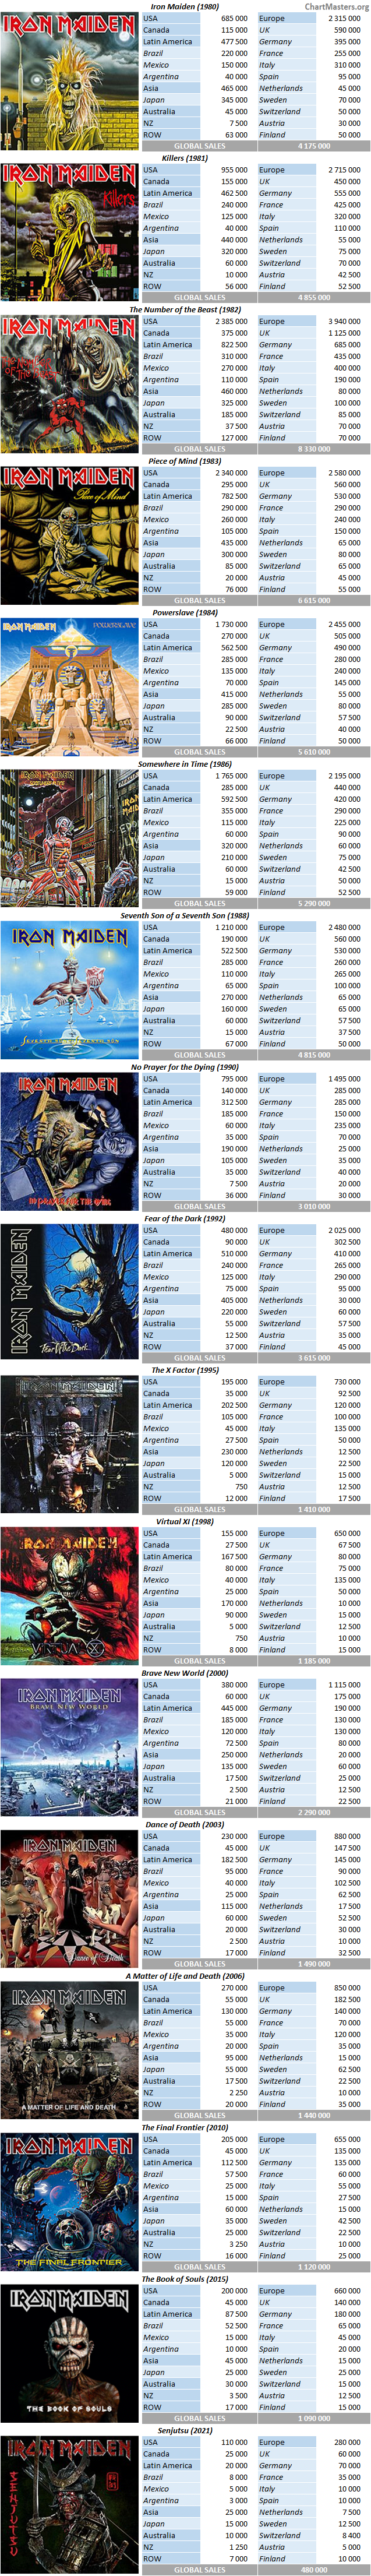 CSPC Iron Maiden album sales breakdowns